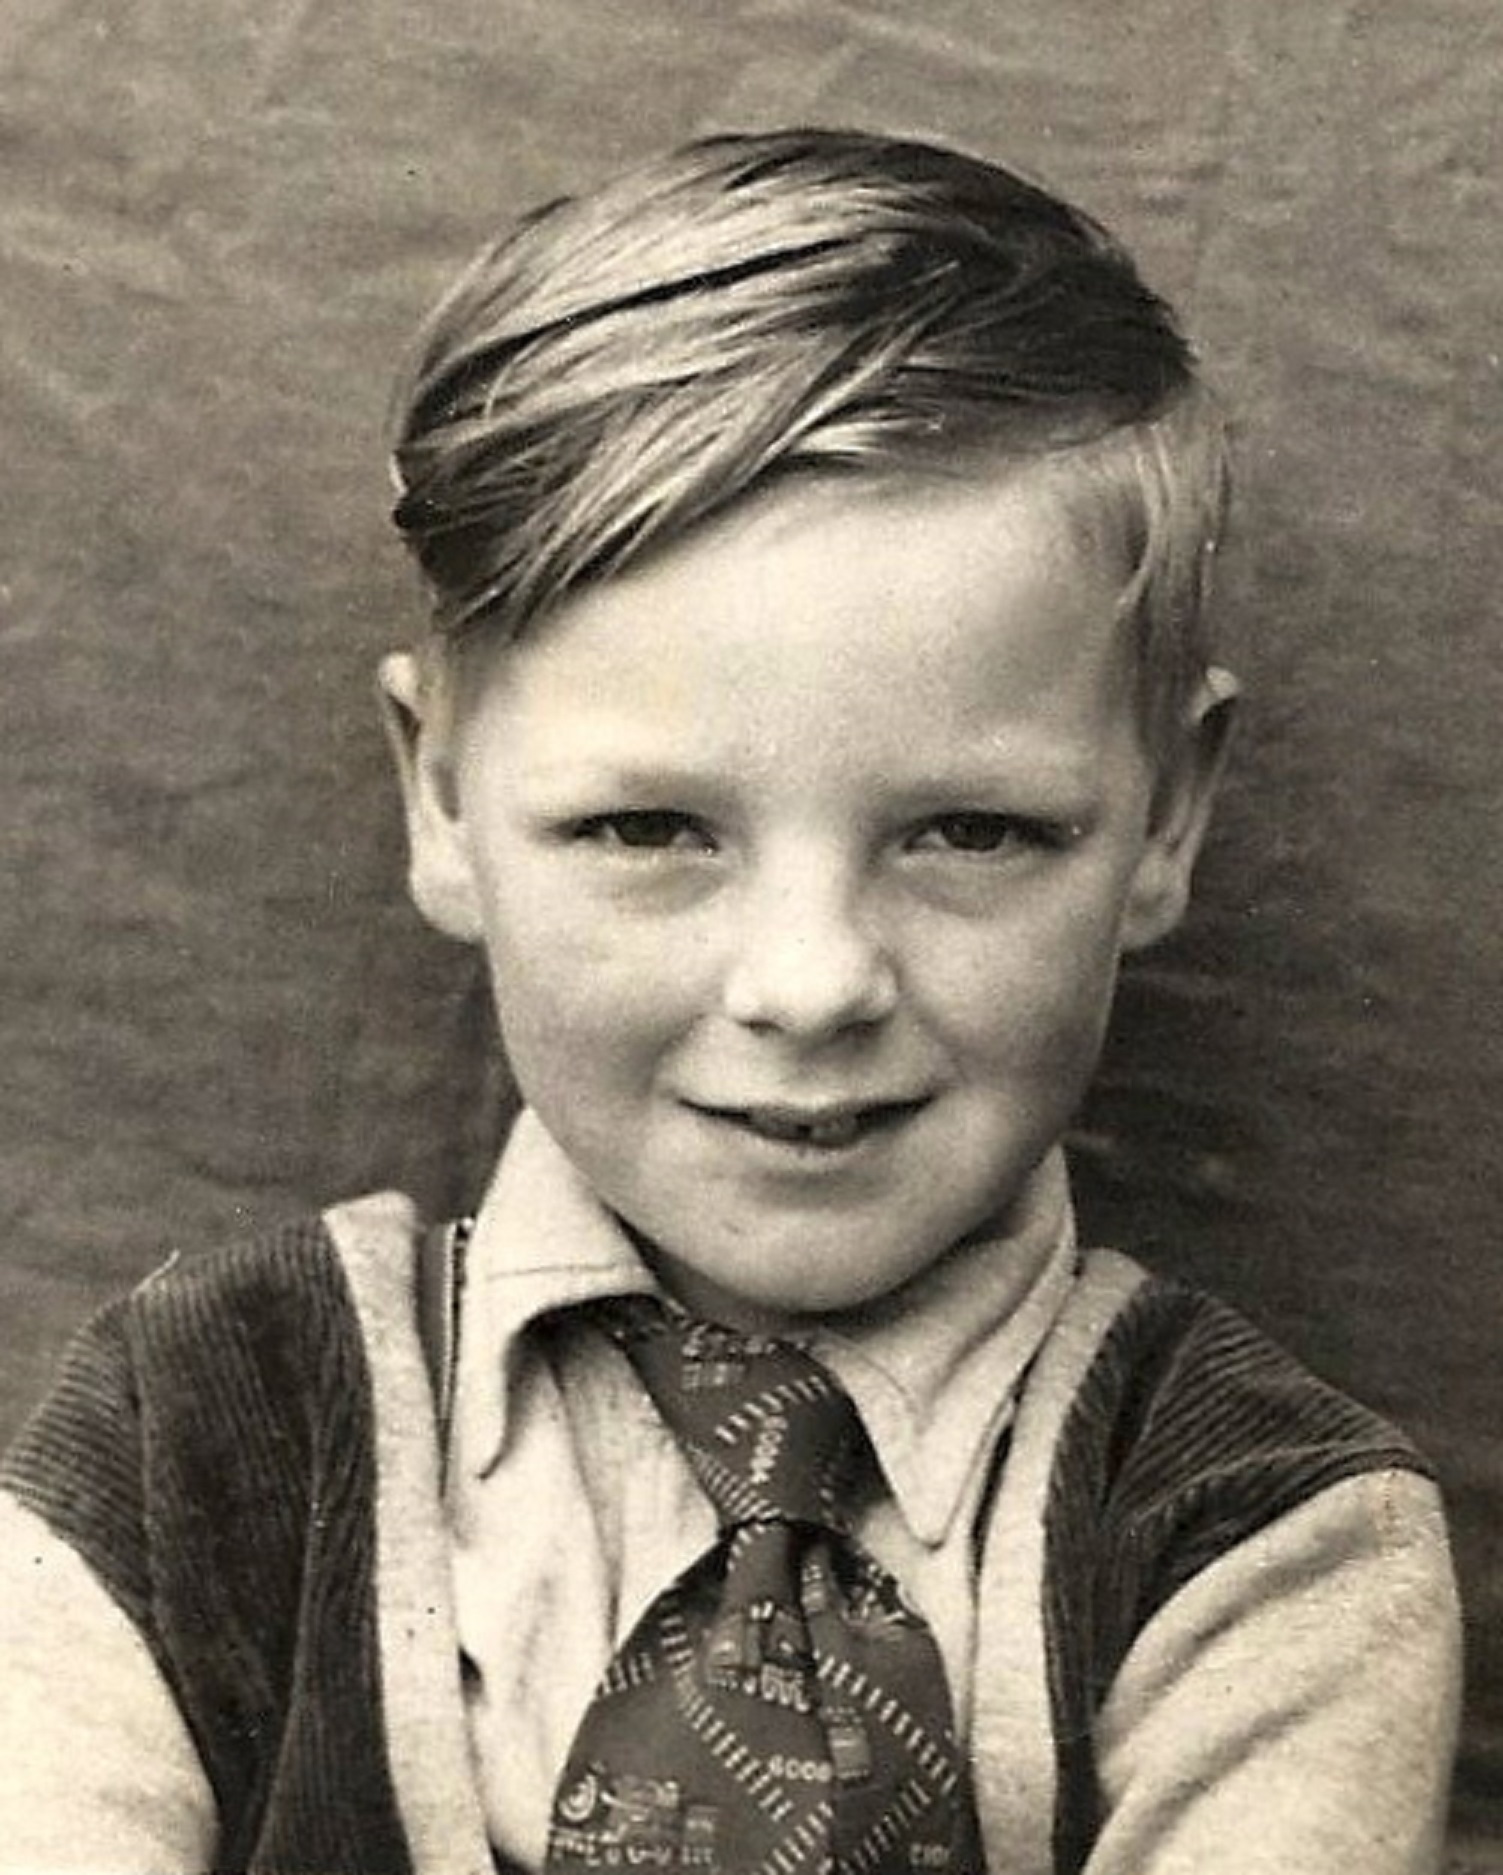 Alan Brine as a young boy